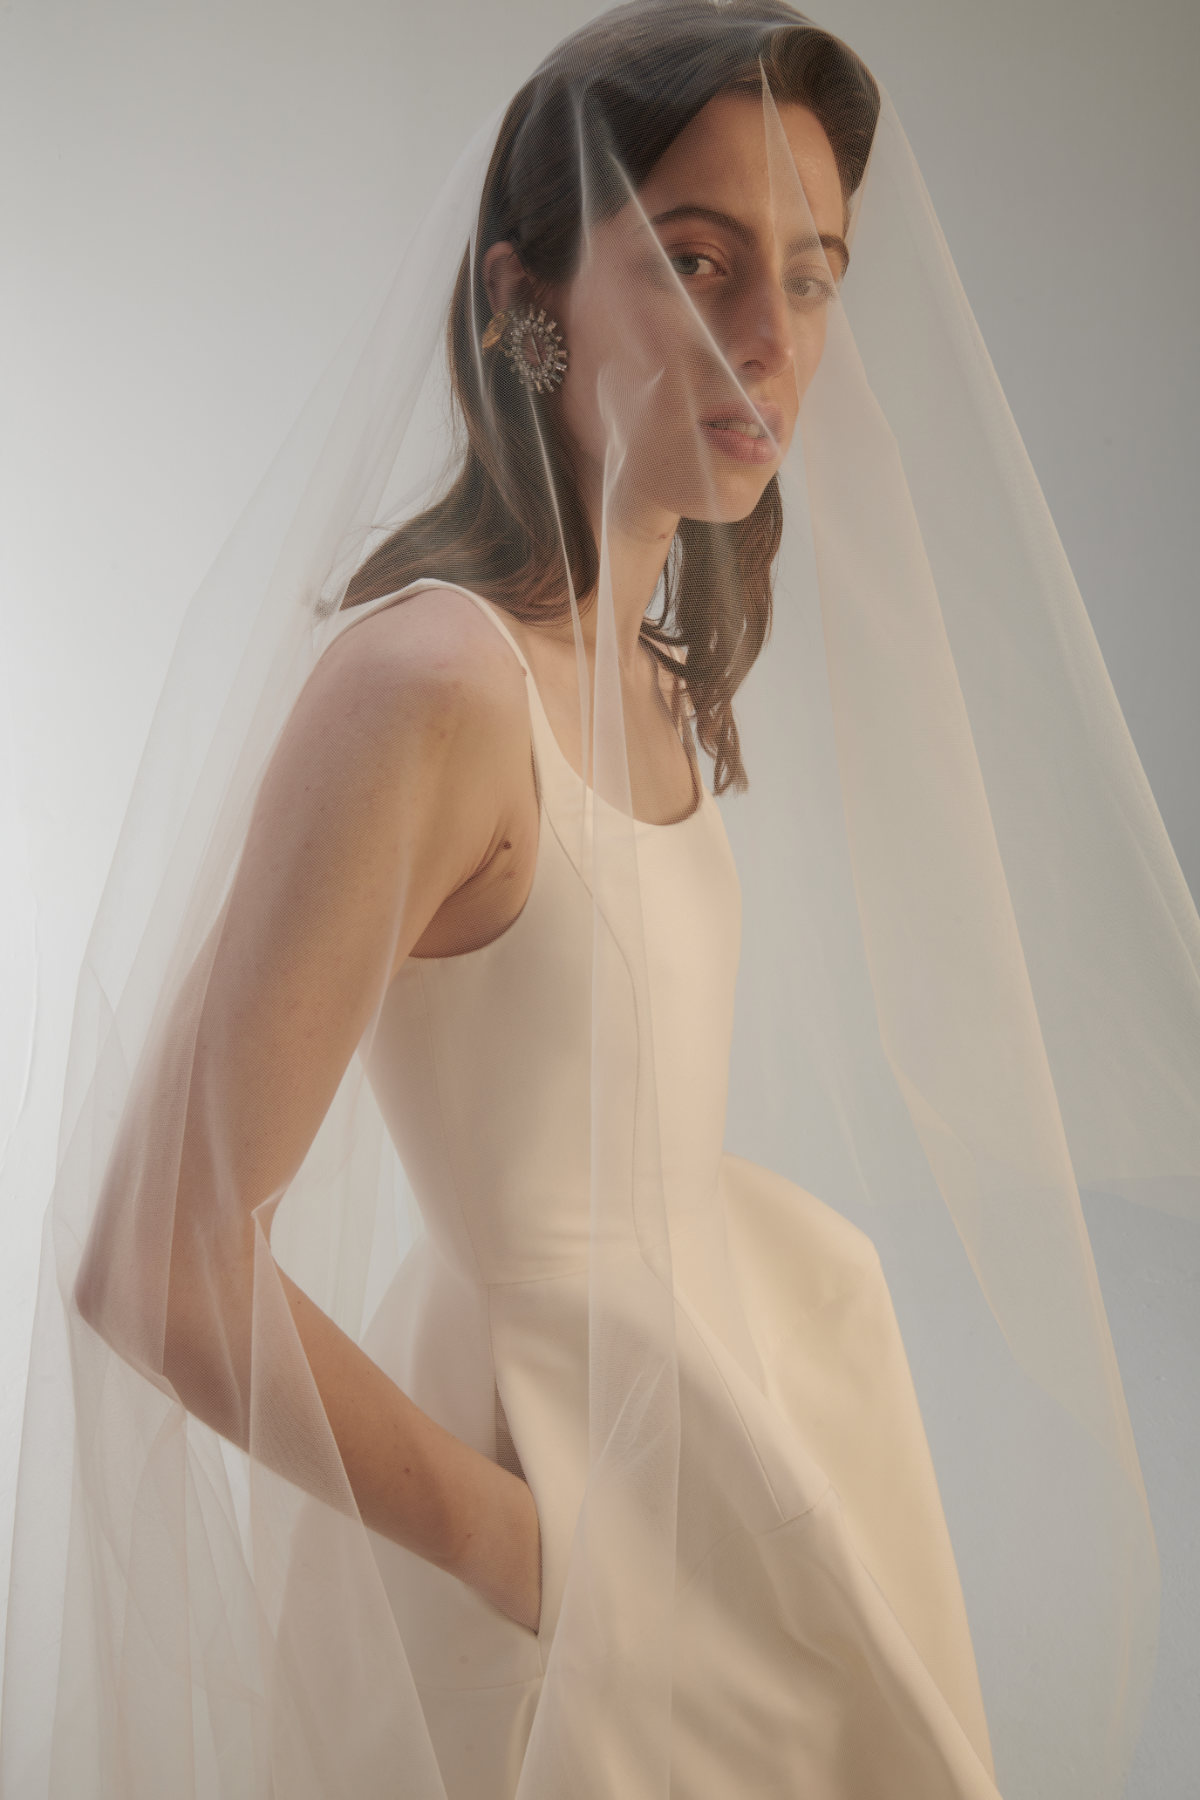 Maison Rabih Kayrouz Presents Its New Bridal Collection: La Mariée